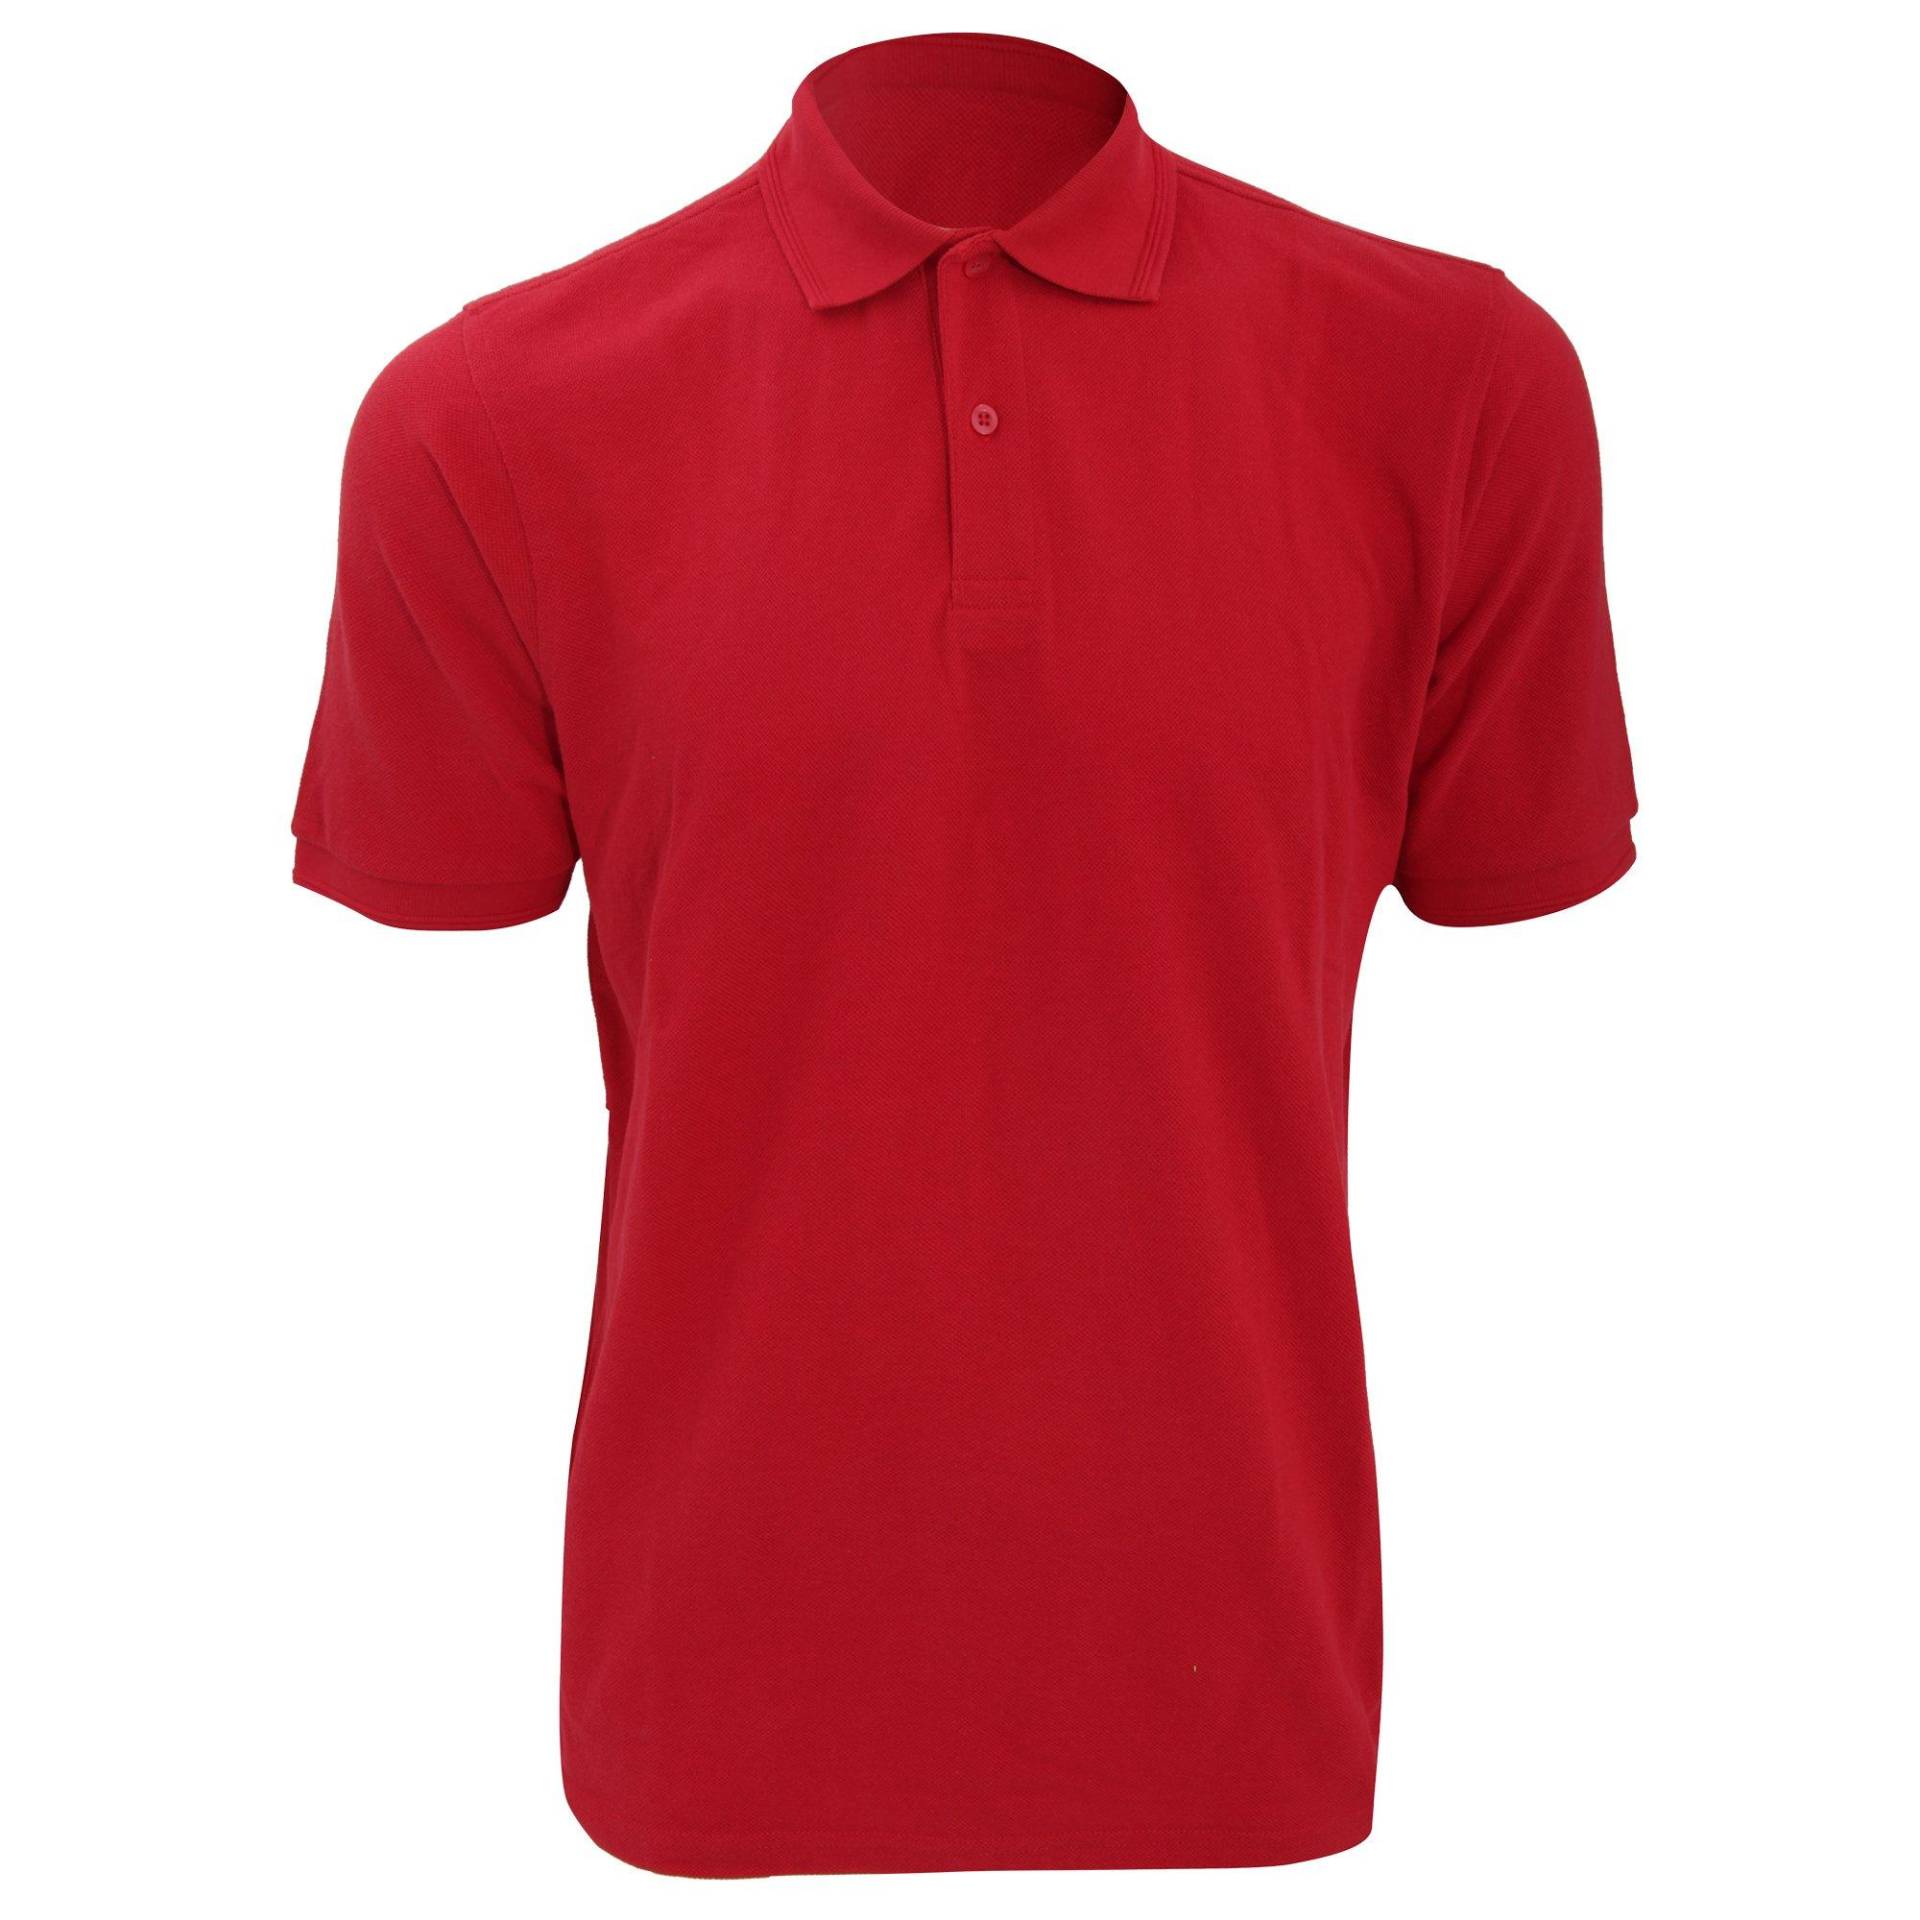 Ripple Collar & Cuff Kurzarm Polo Shirt Herren Rot Bunt S von Russell